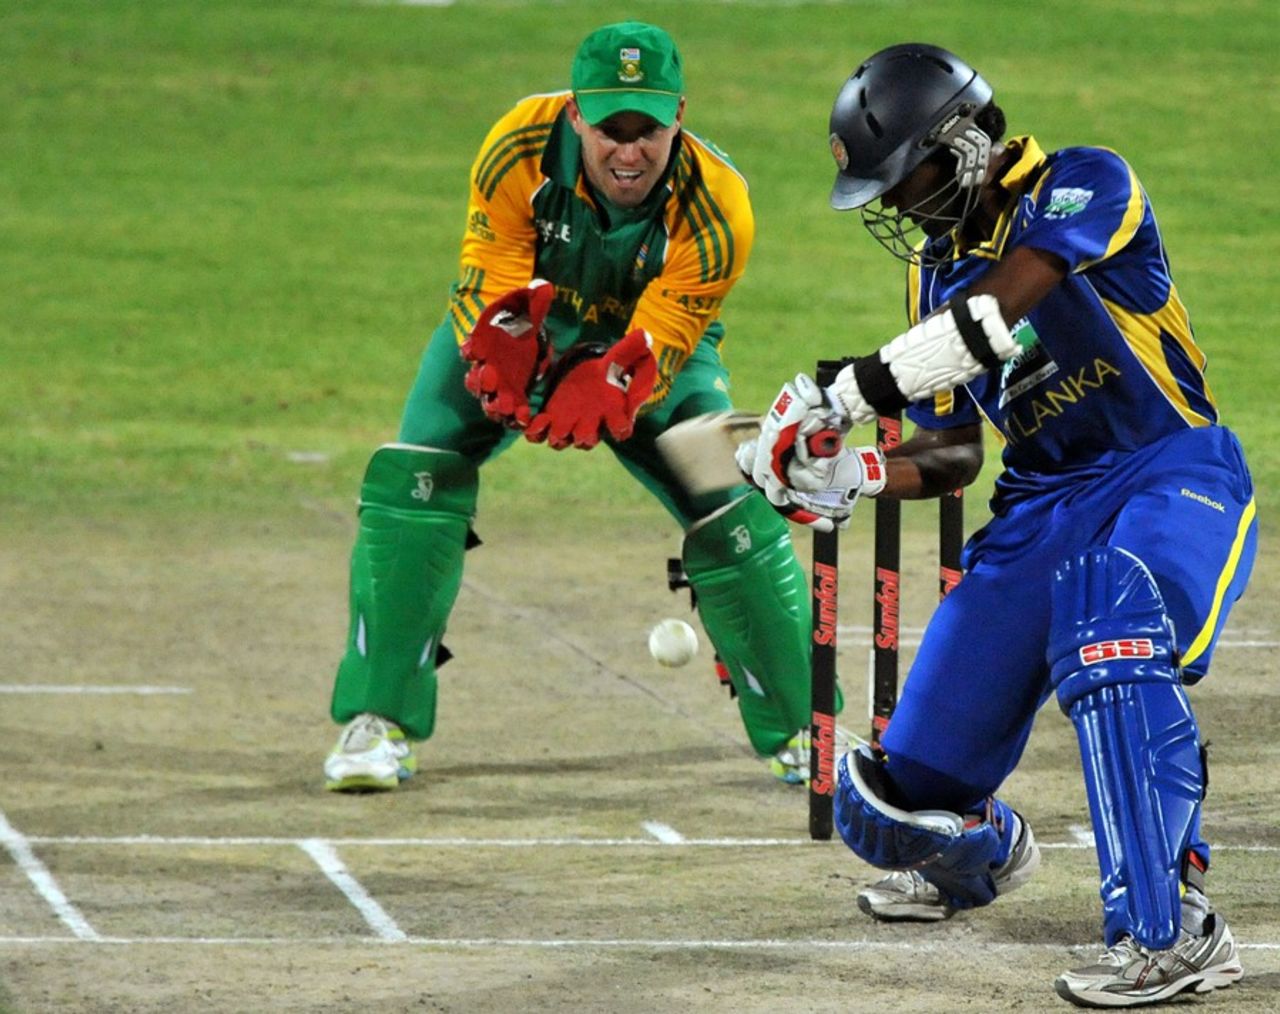 Dinesh Chandimal shapes to cut, South Africa v Sri Lanka, 4th ODI, Kimberley, January 20, 2012